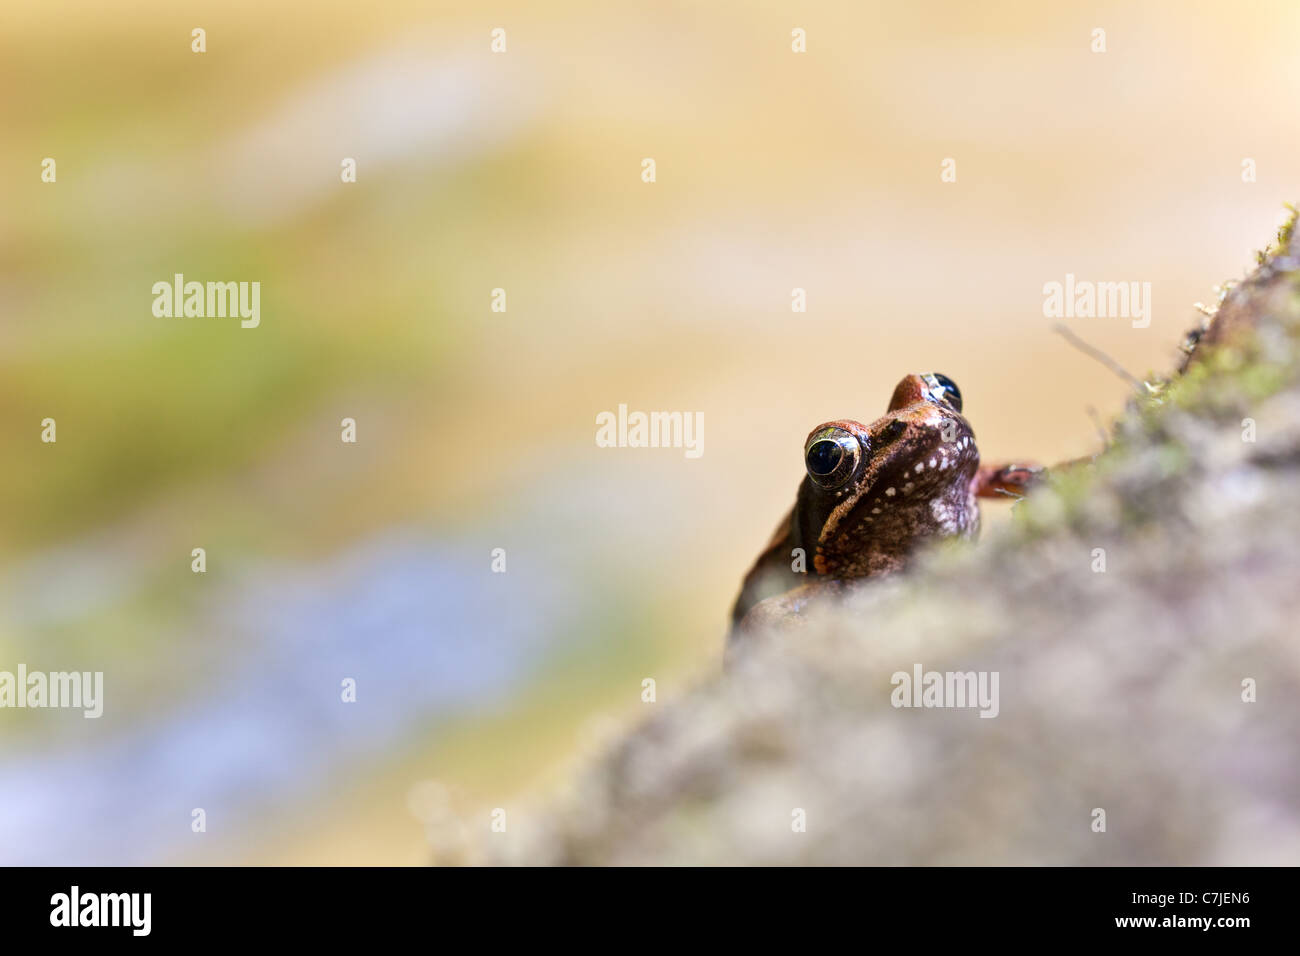 Iberian frog on rock Stock Photo